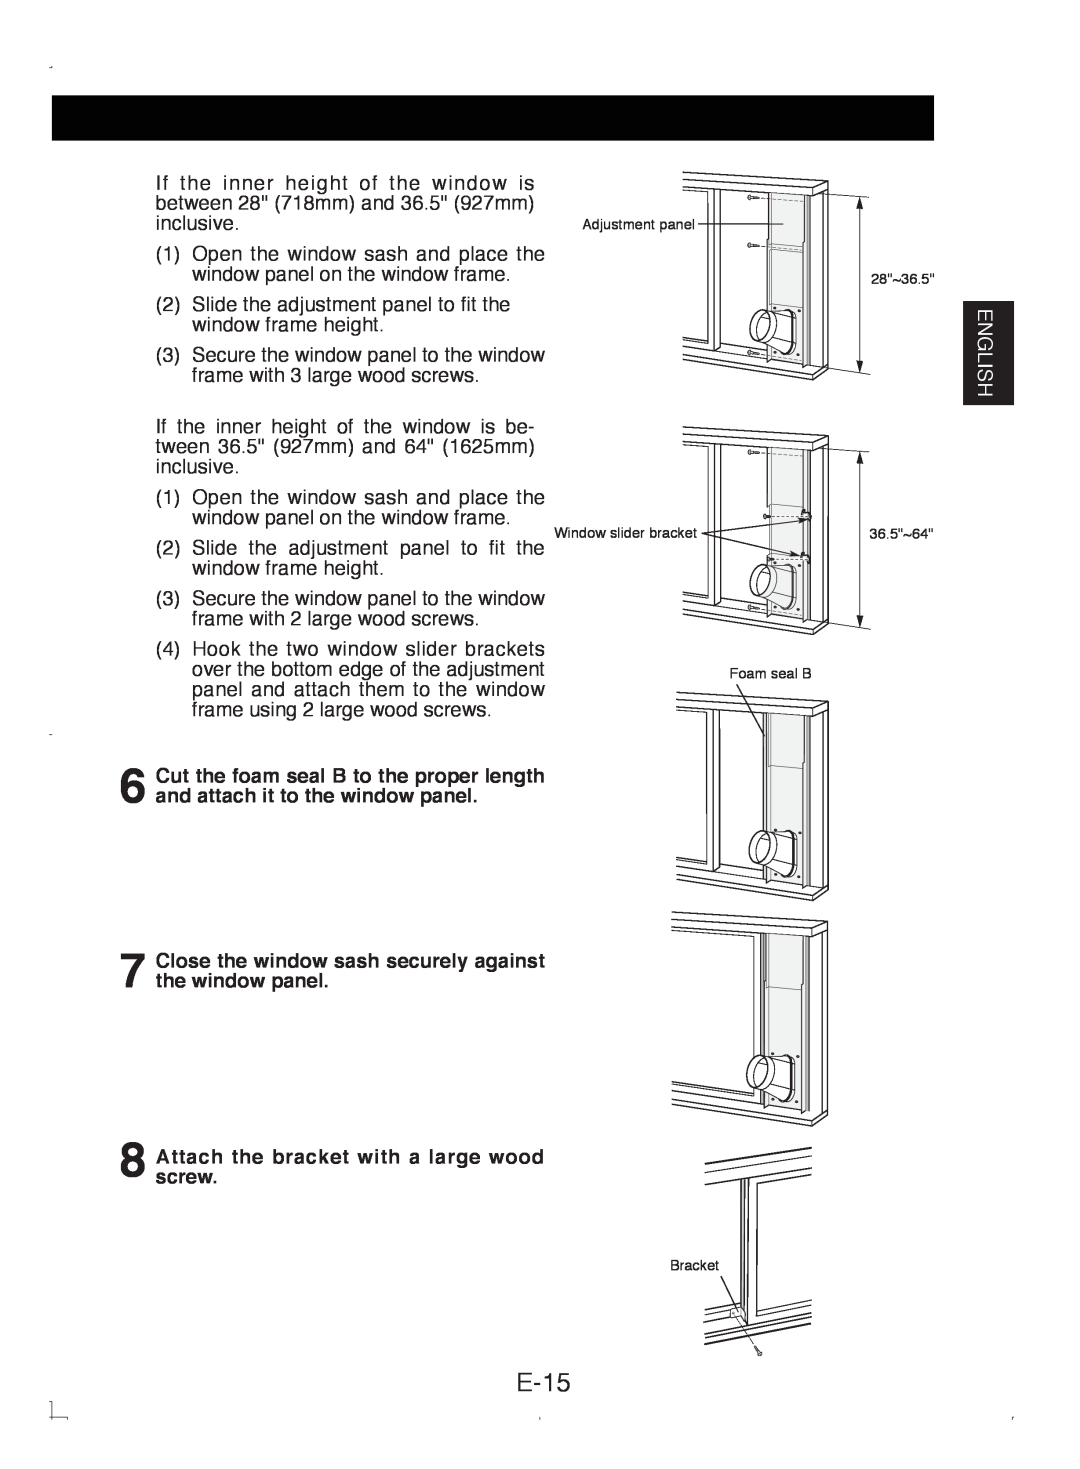 Sony CV-P12PX E-15, English, Adjustment panel Window slider bracket, Foam seal B, 28~36.5, 36.5~64, Bracket 